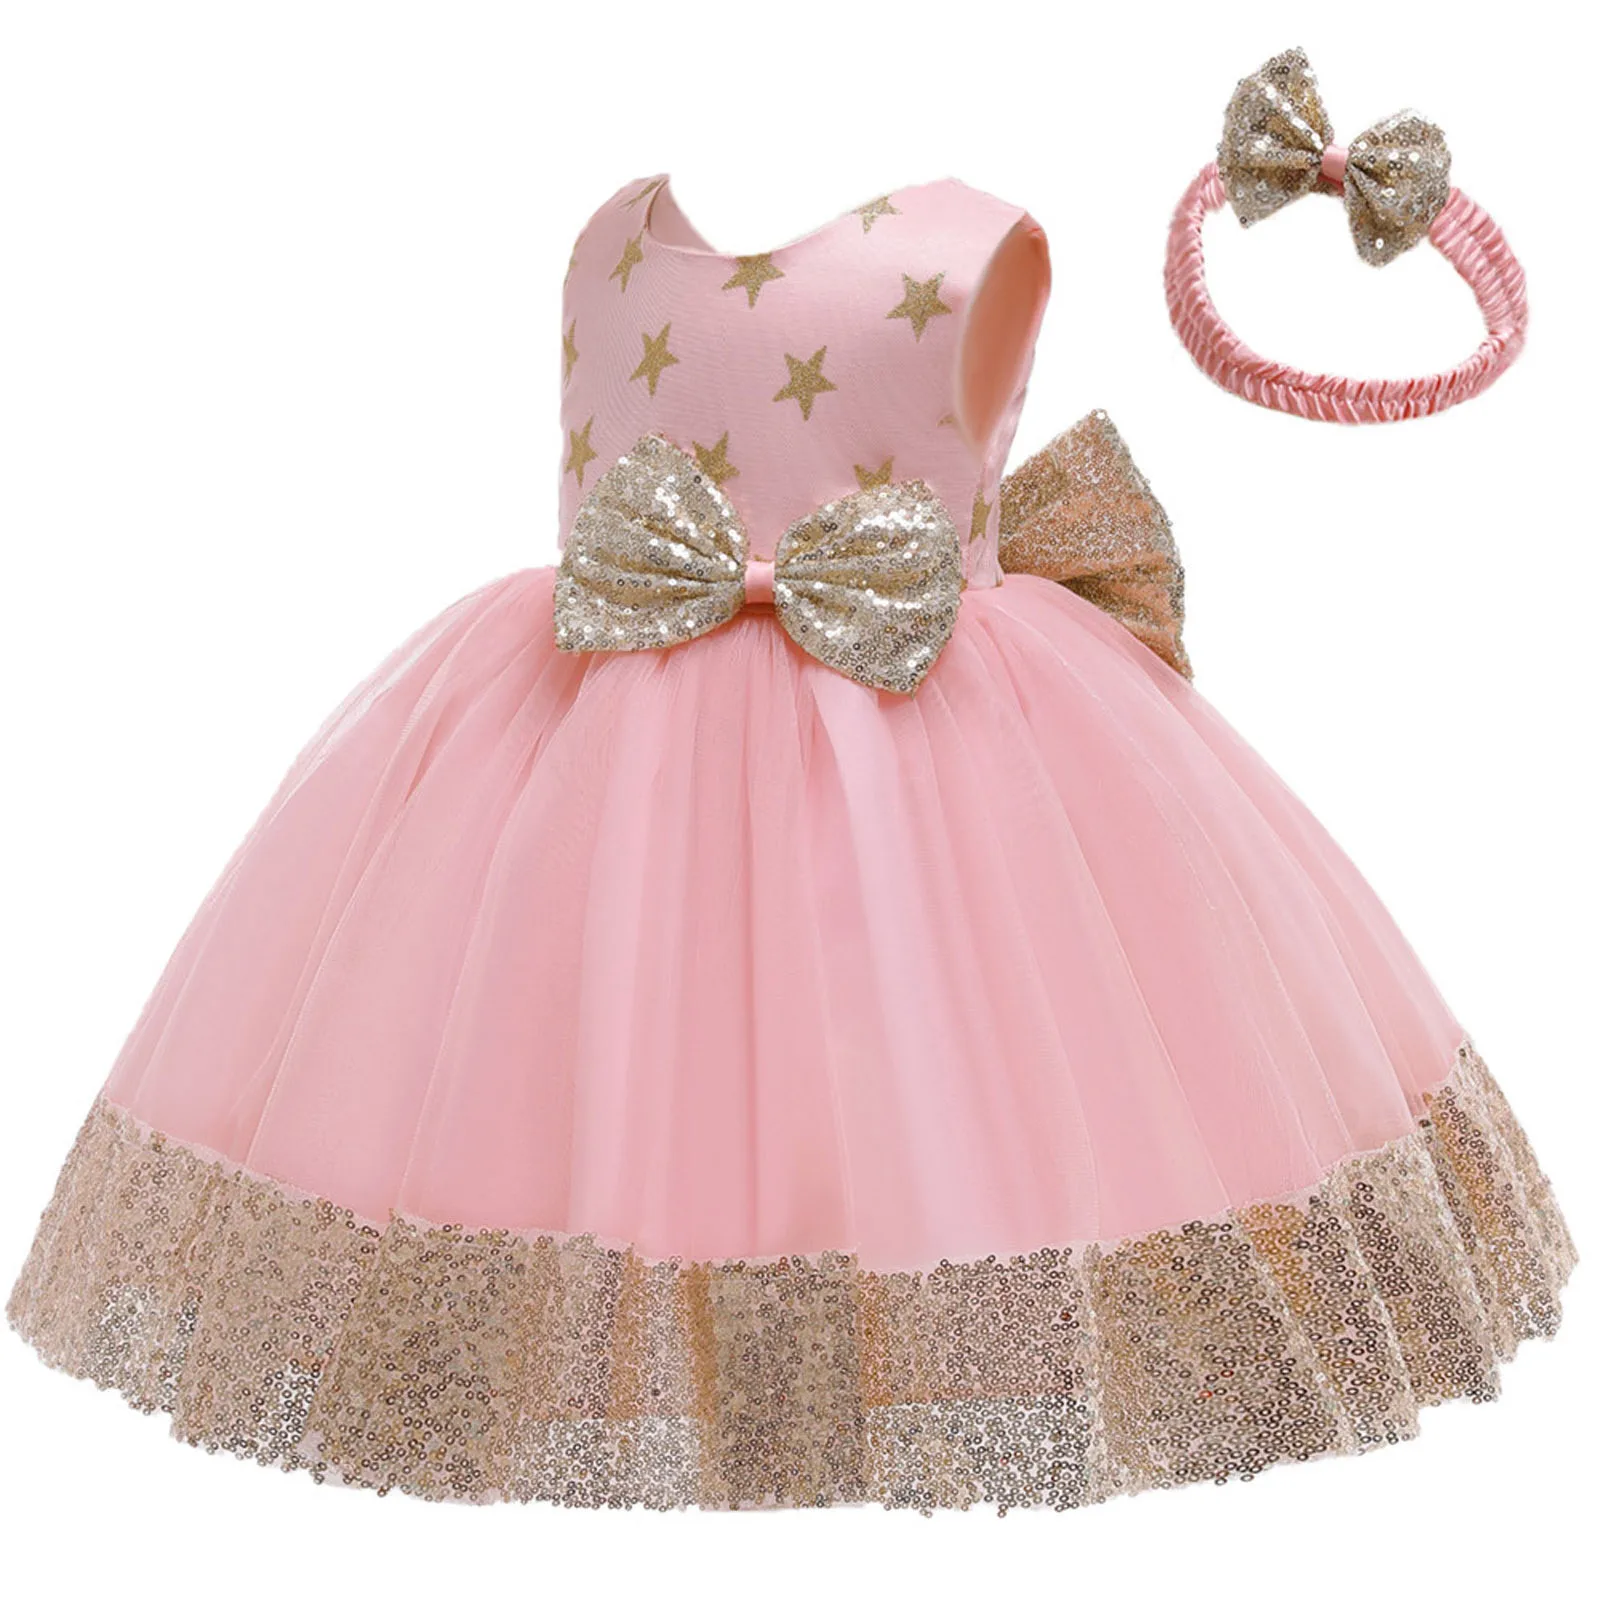 Sequins Bowknot Princess Dress For Baby Girl Flower Elegant Girls Dresses Winter Party Christmas Car